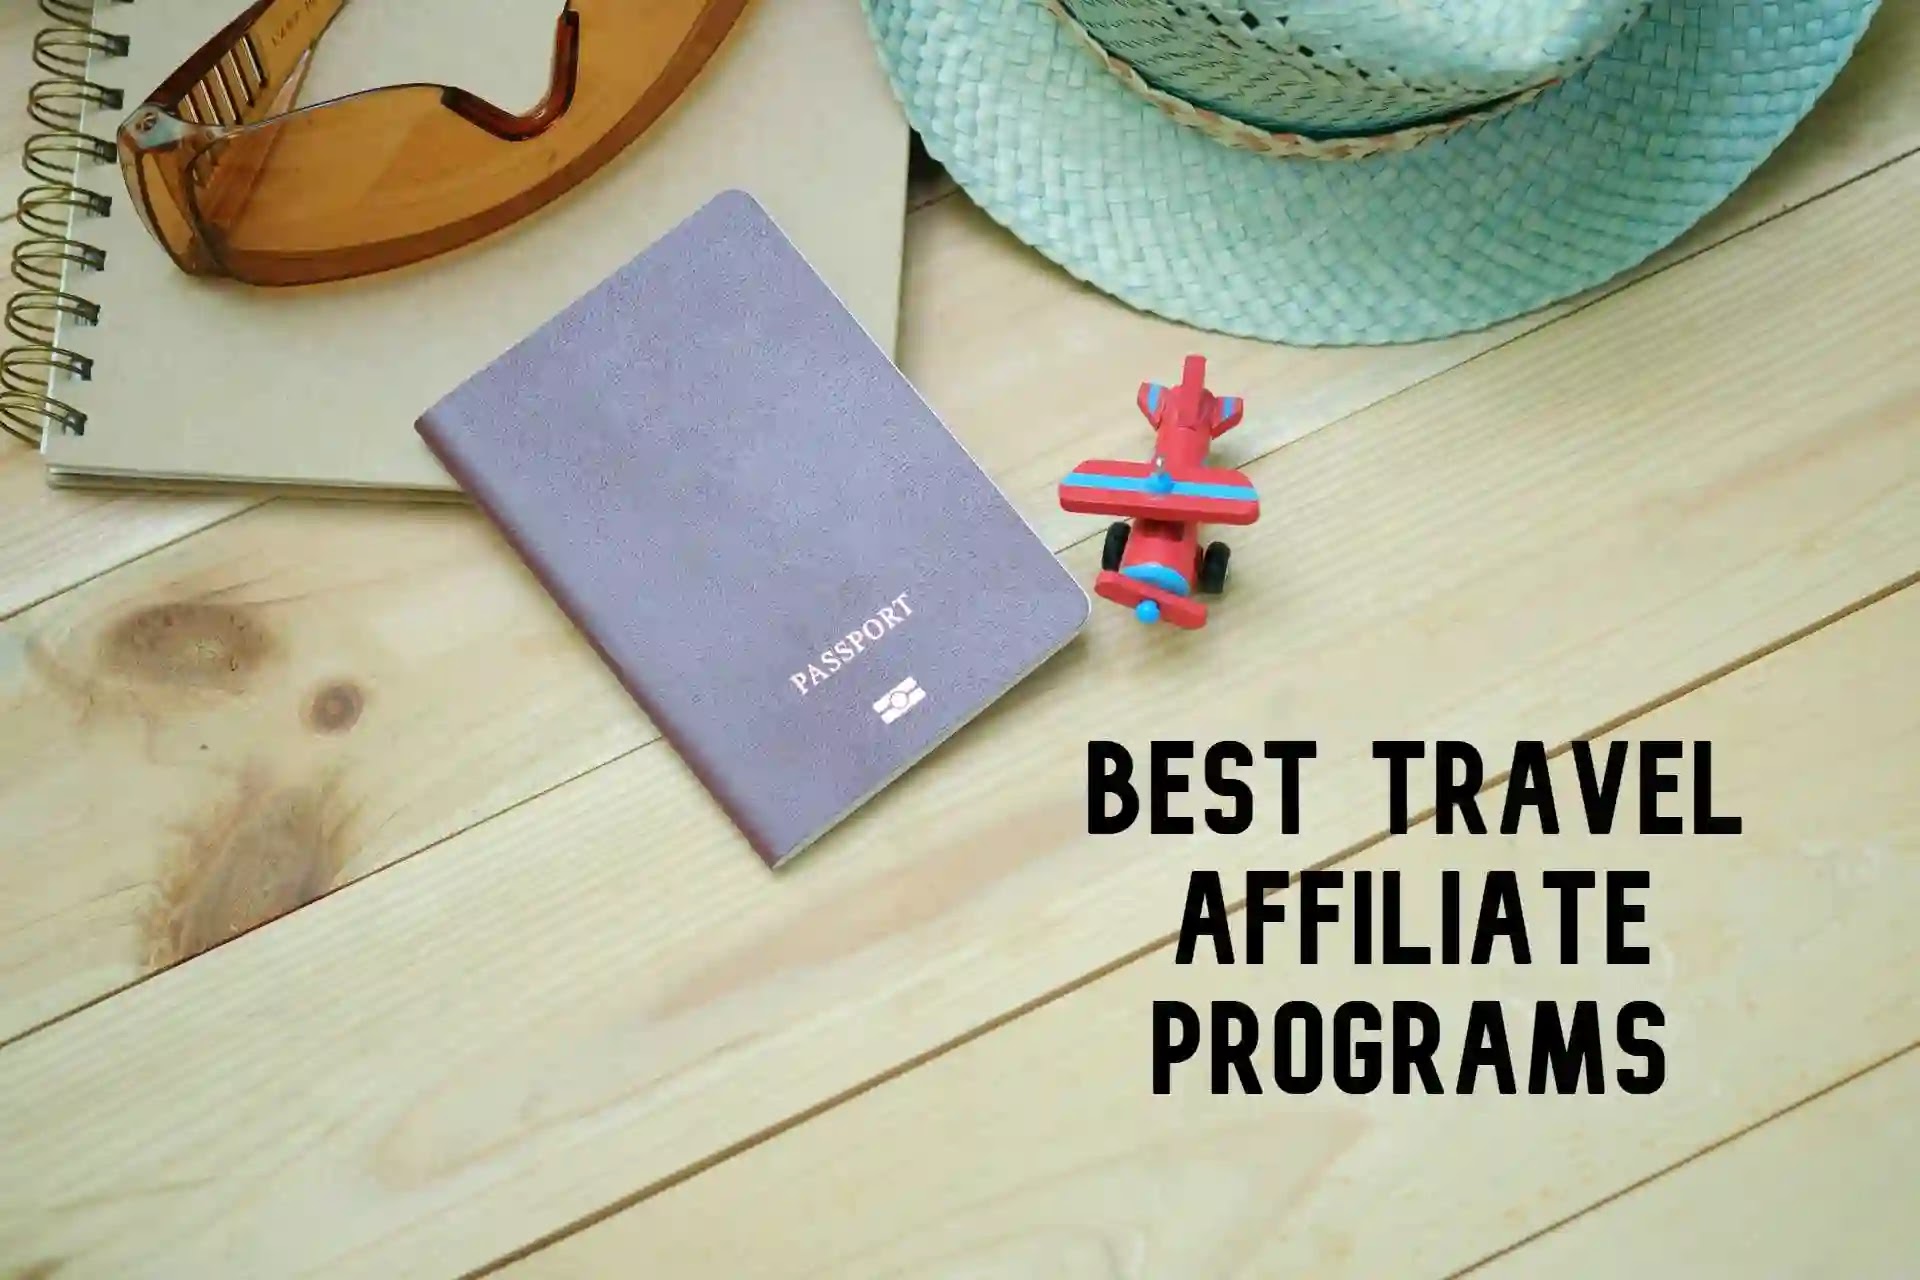 The BEST Travel Affiliate Programs